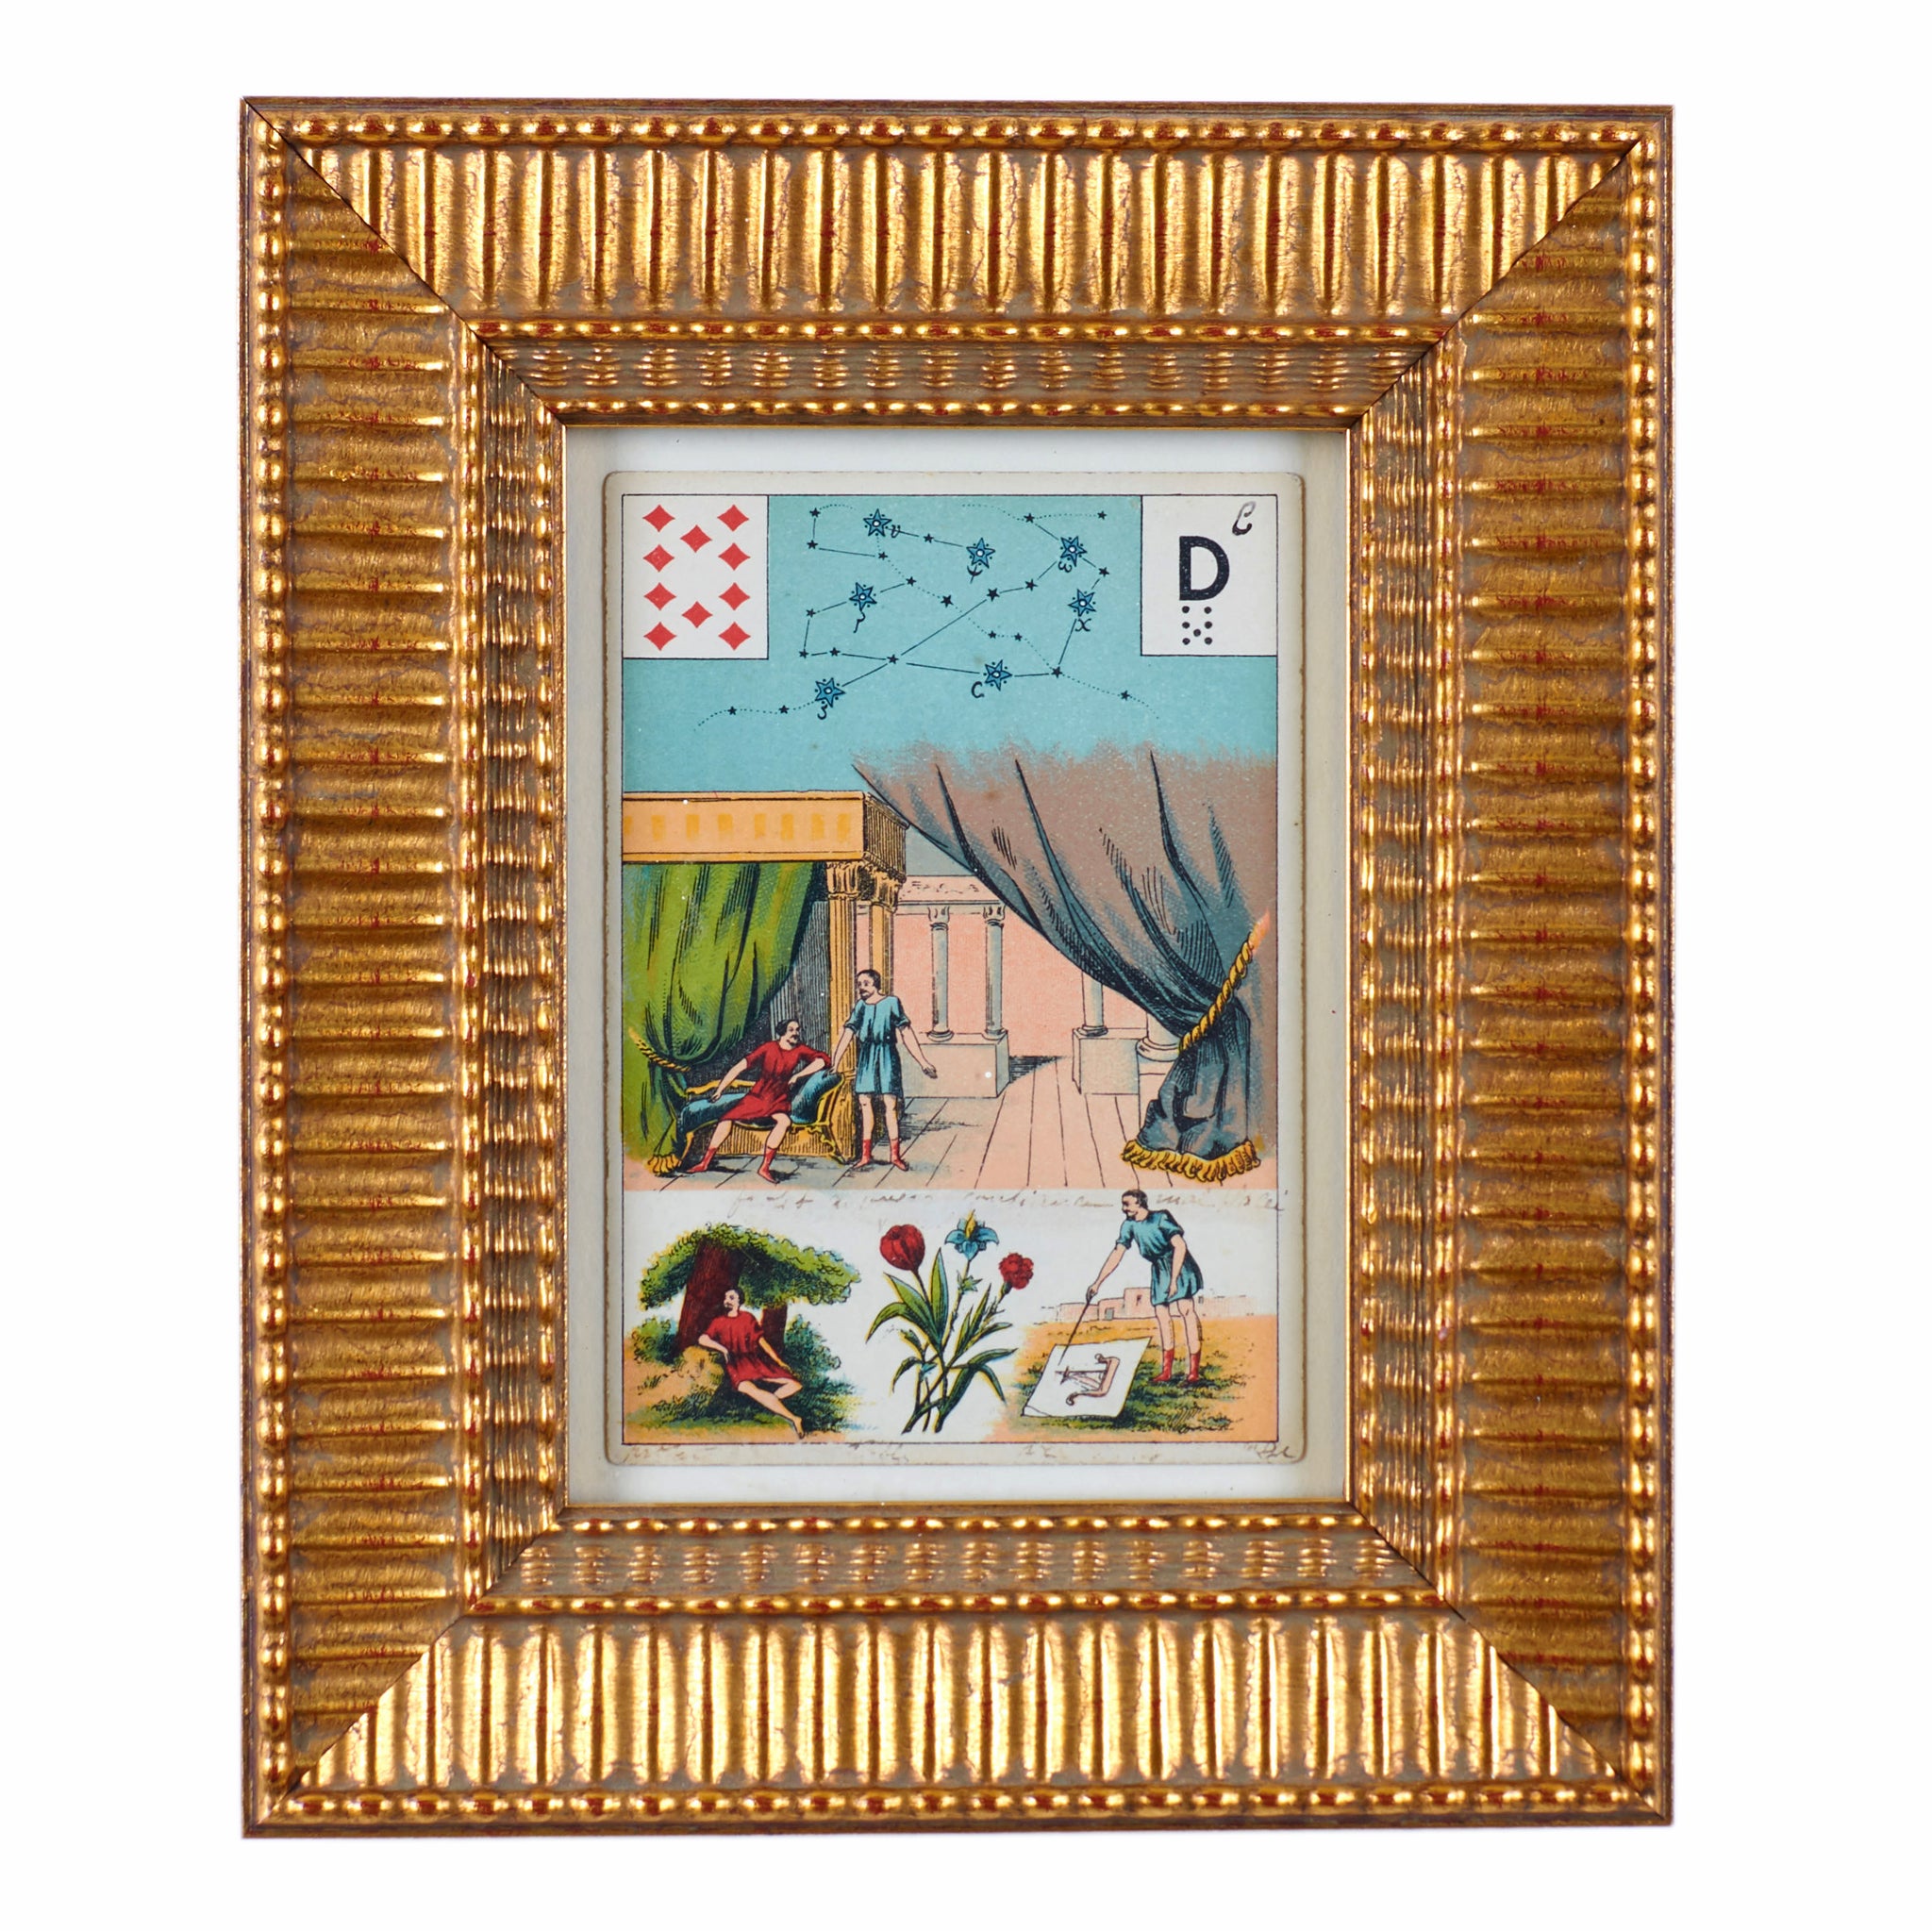 Grand Jeu Lenormand Tarot Cards c.1890s - Framed Set of 23